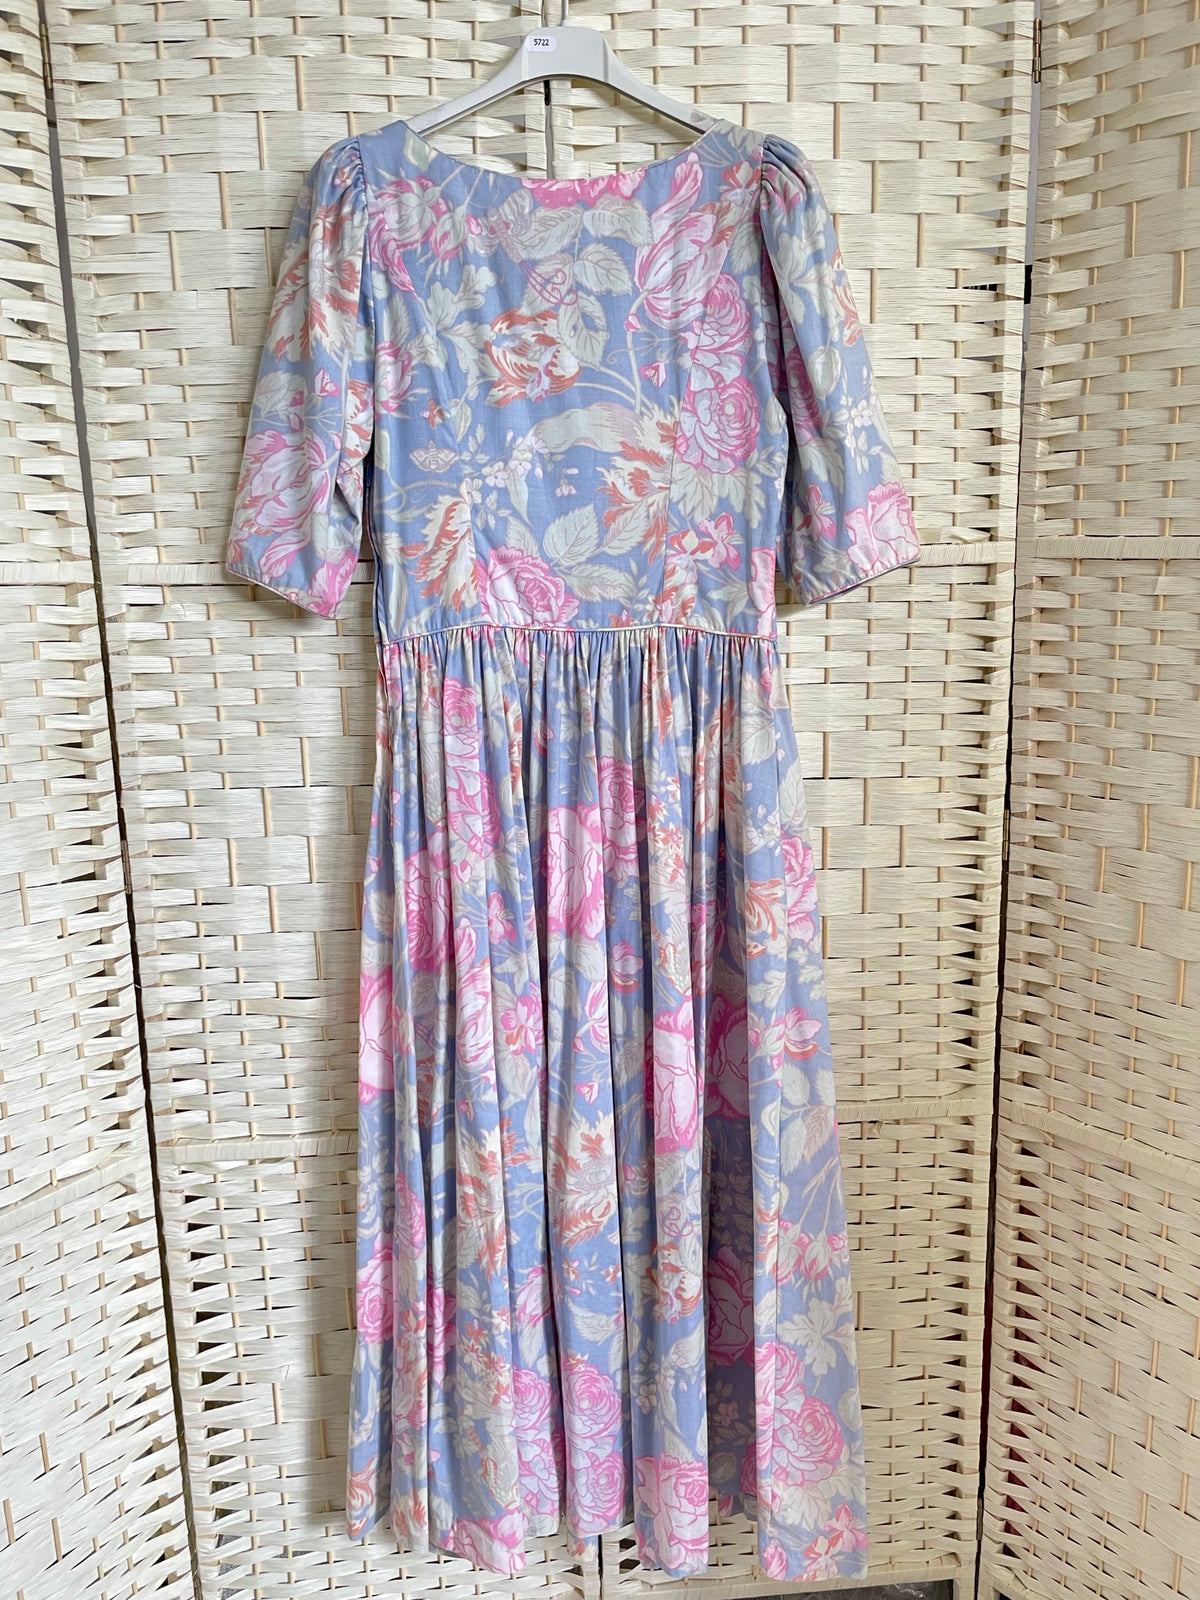 Vintage Laura Ashley Garden Print Dress